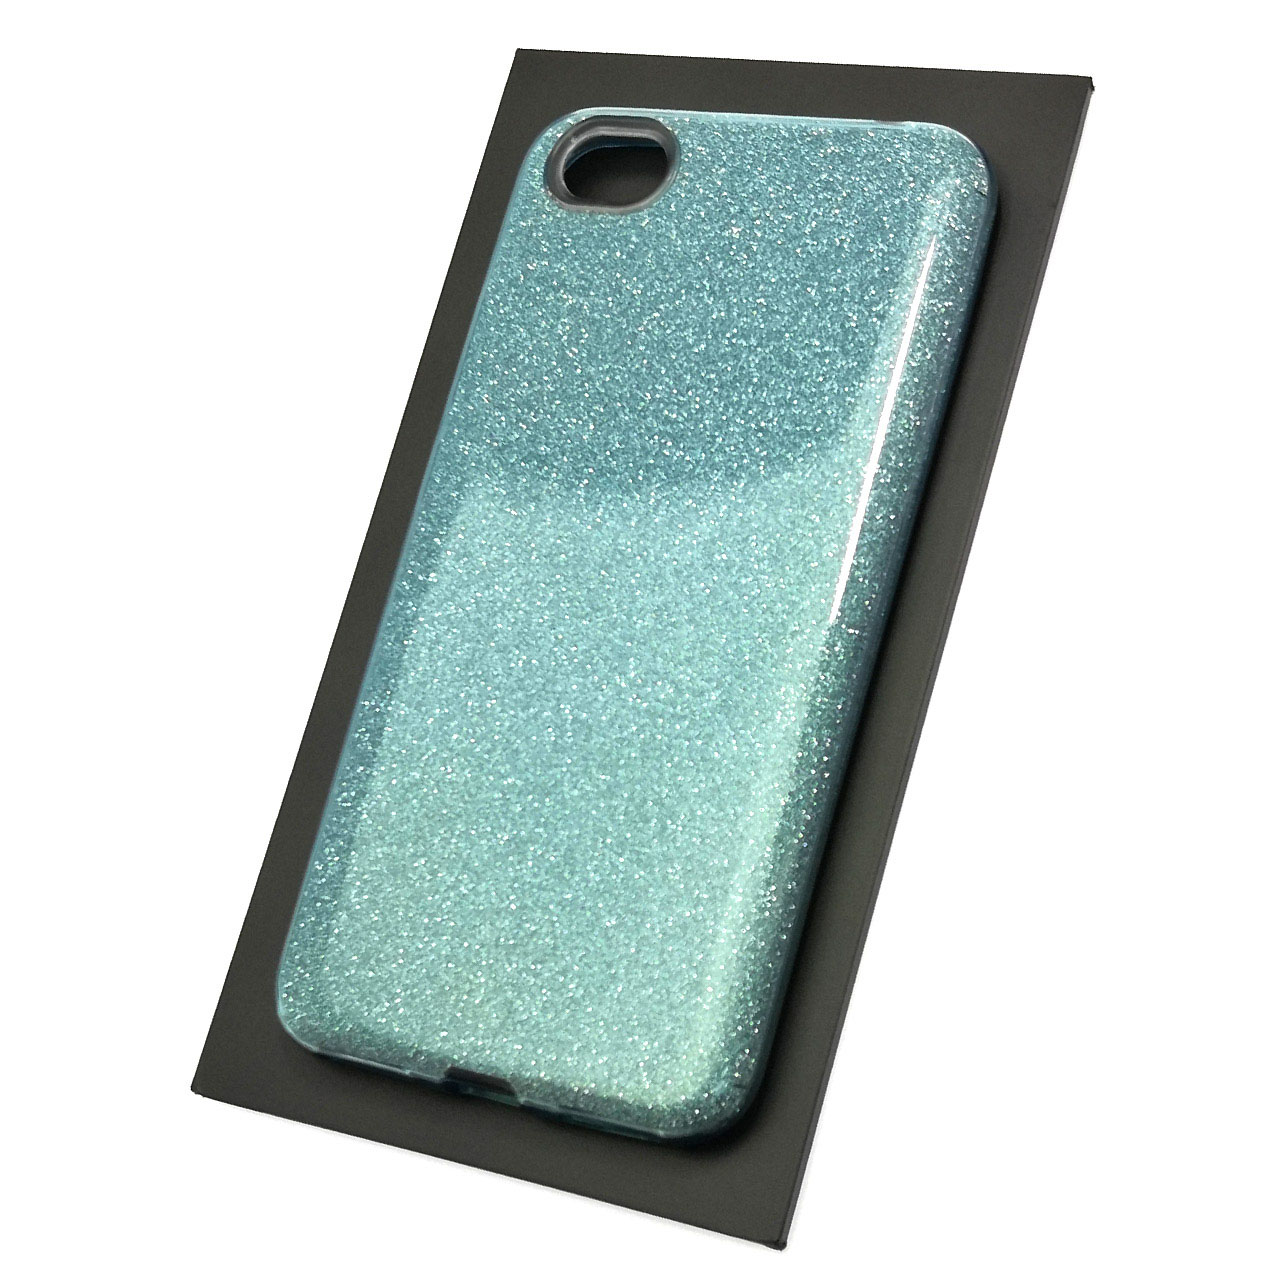 Чехол накладка Shine для XIAOMI Redmi Note 5A, 16GB, силикон, блестки, цвет голубой